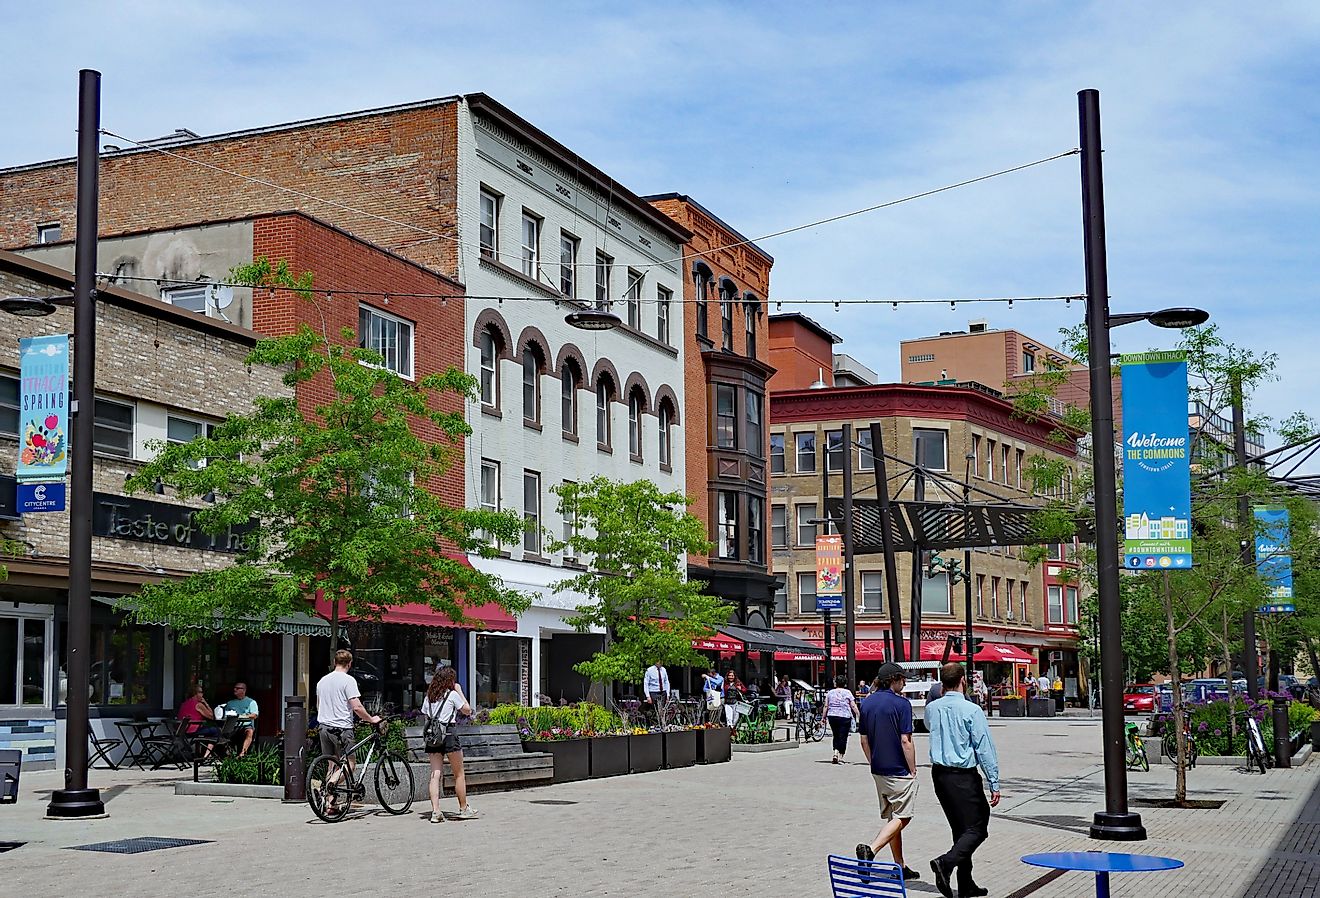 Downtown Ithaca, New York. Image credit Spiroview Inc via Shutterstock